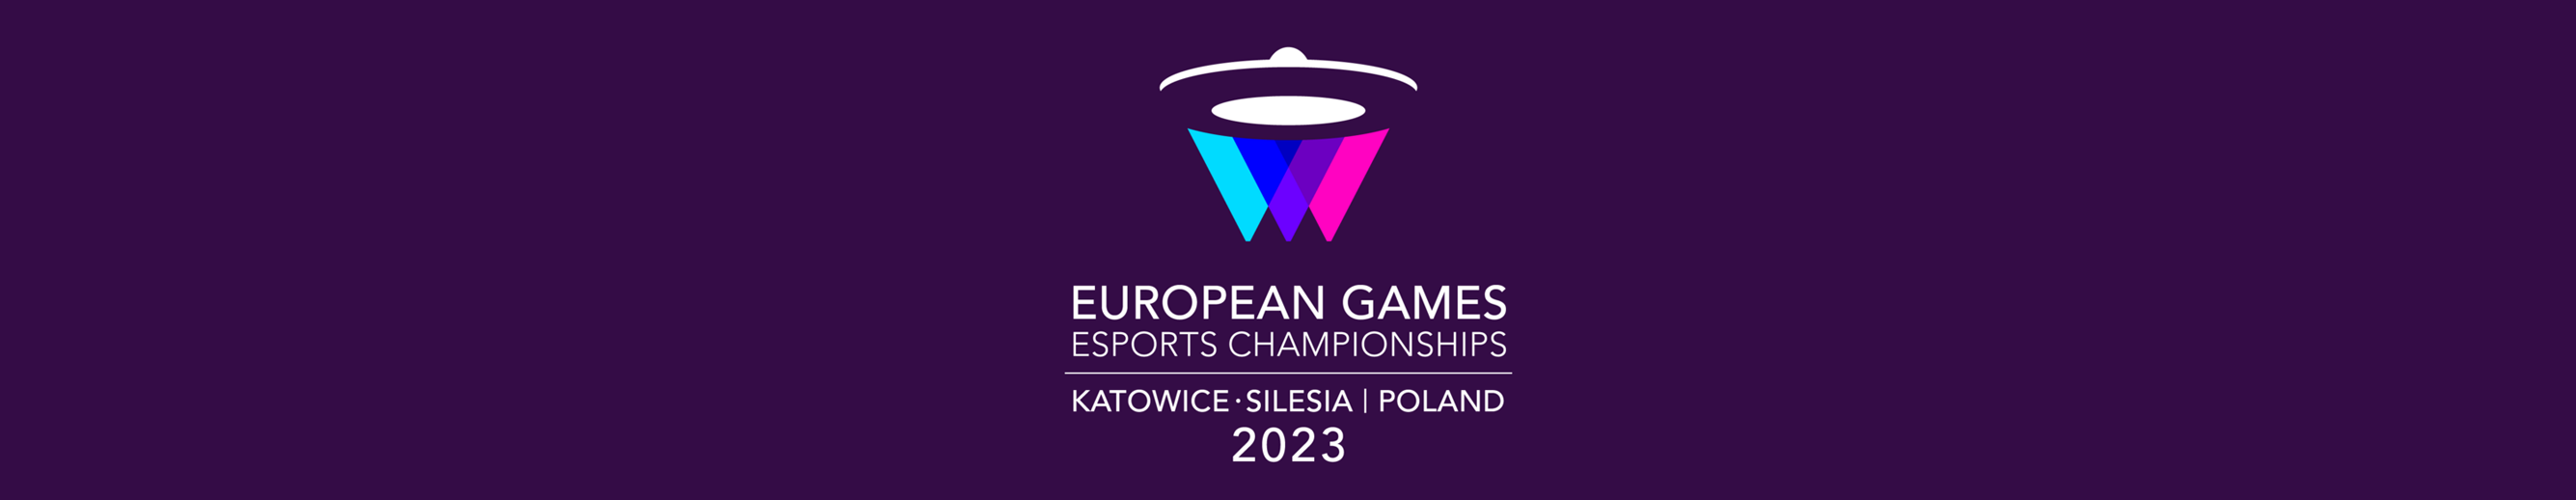 European-Games-Esports-Championship-2023